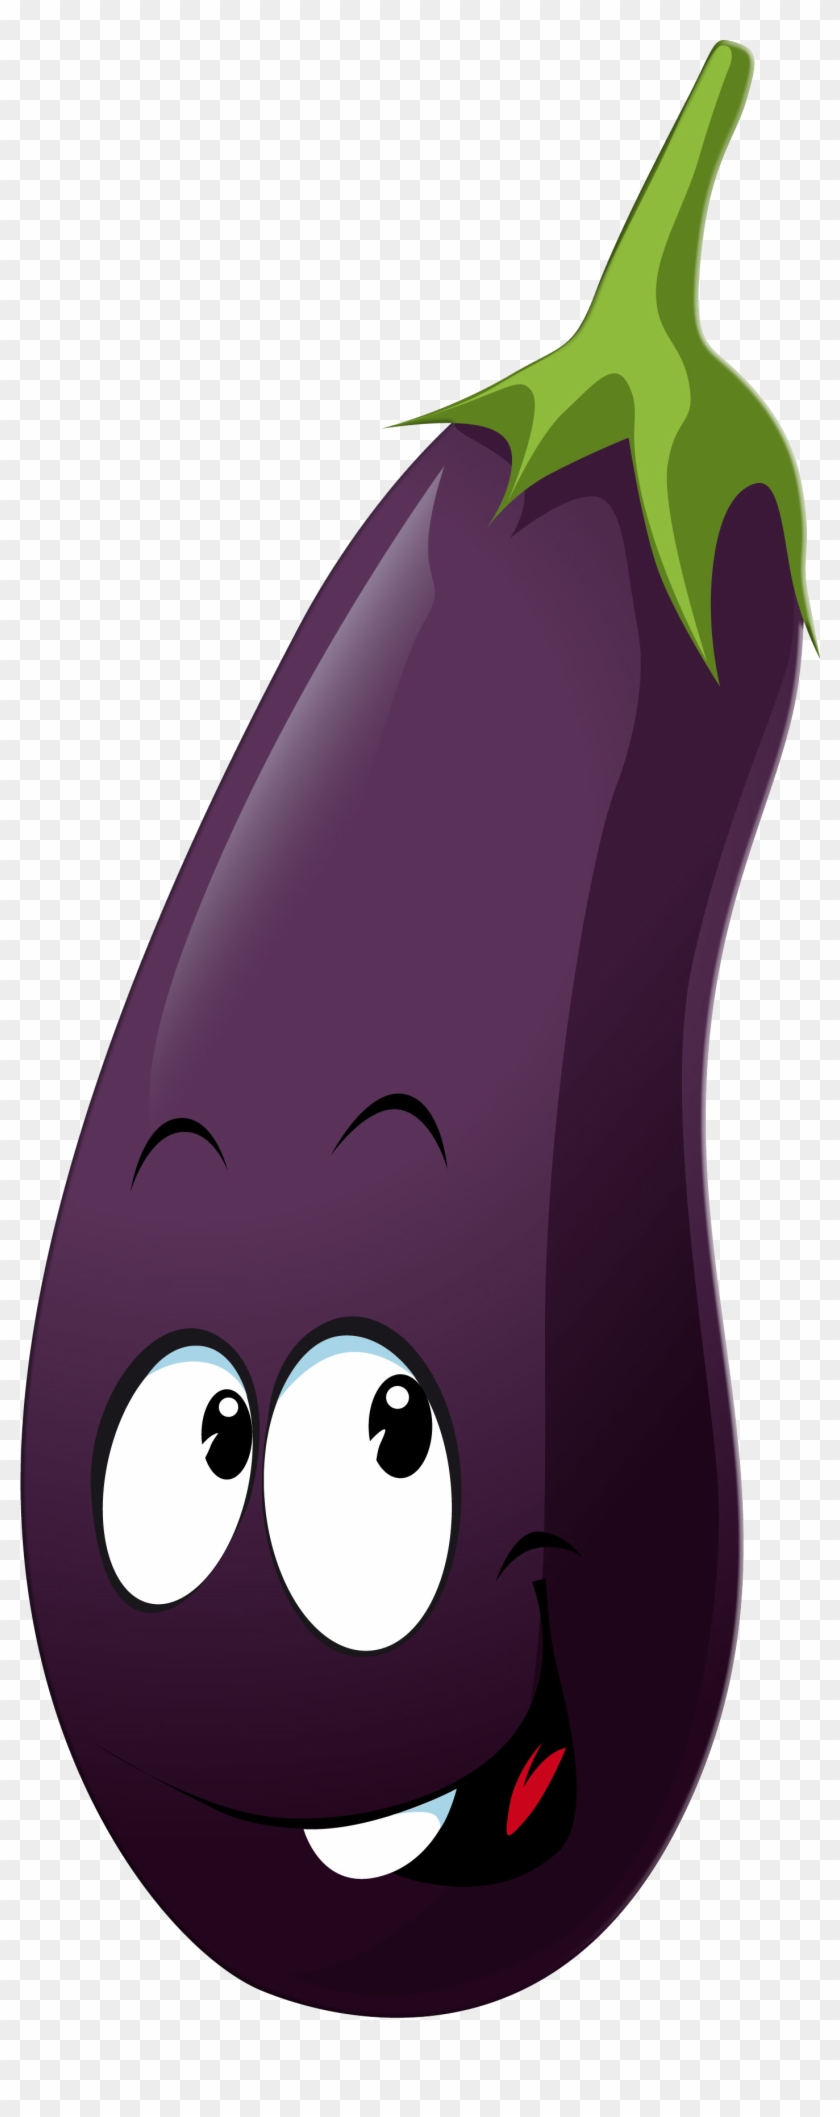 Veggies - Eggplant Cartoon - Free Transparent PNG Clipart Images Download